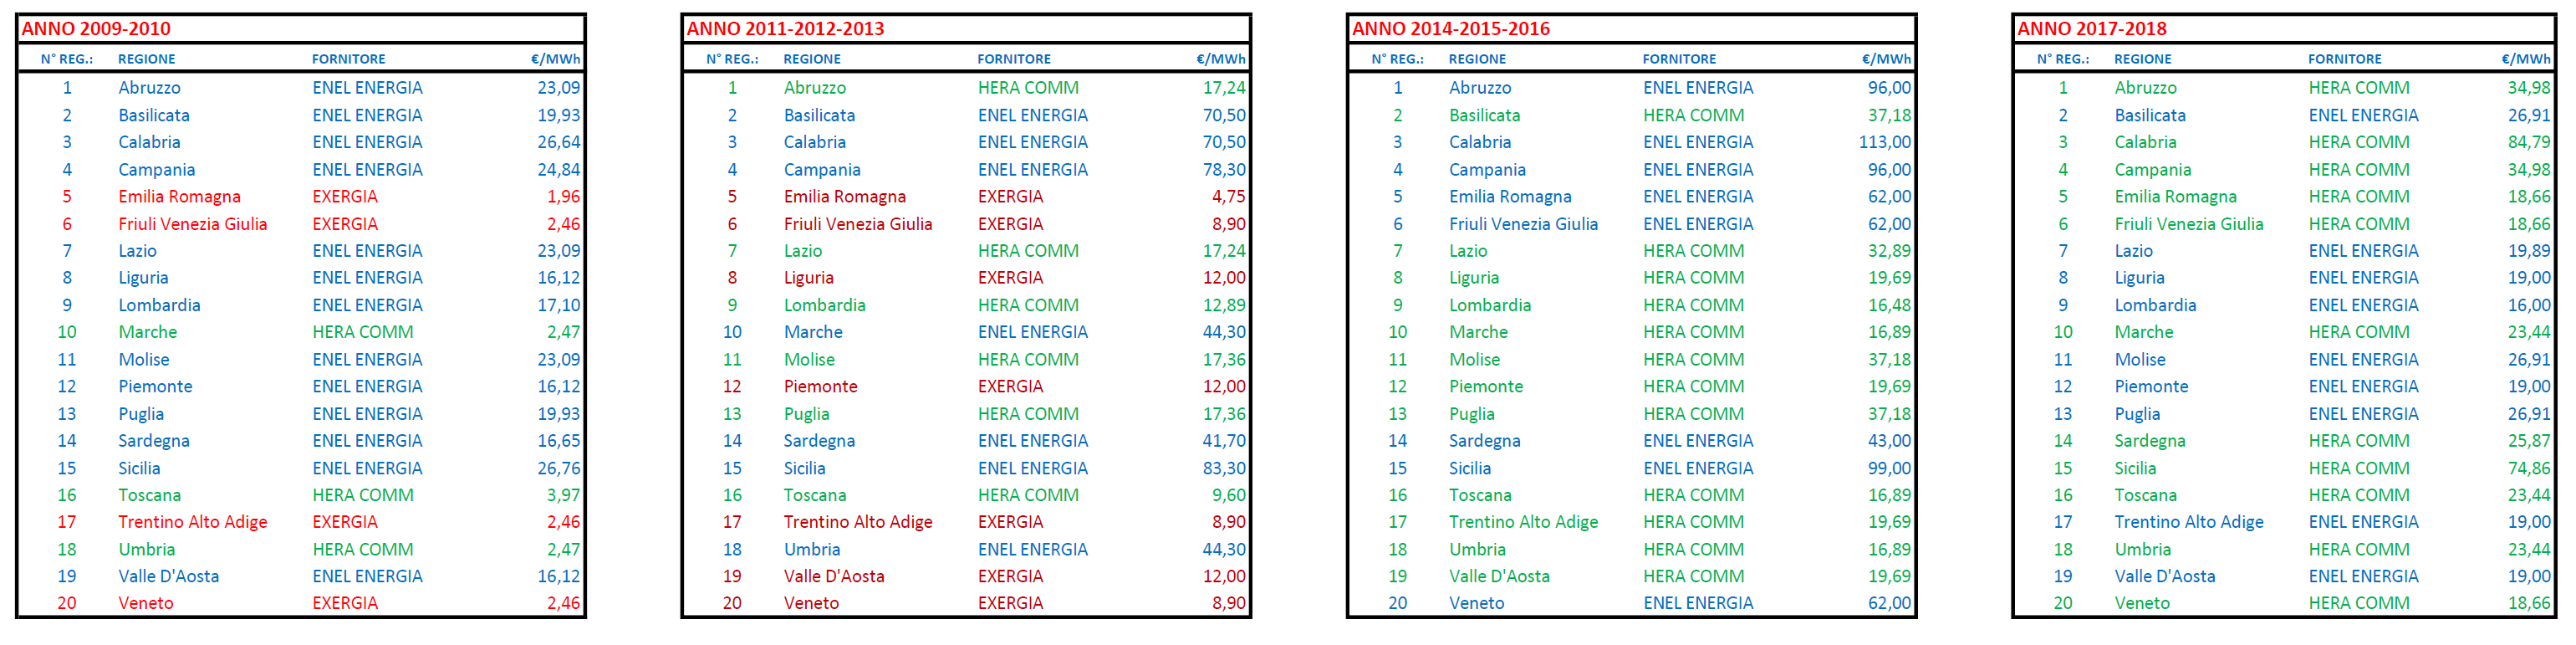 tabelle-omega-2009-2018